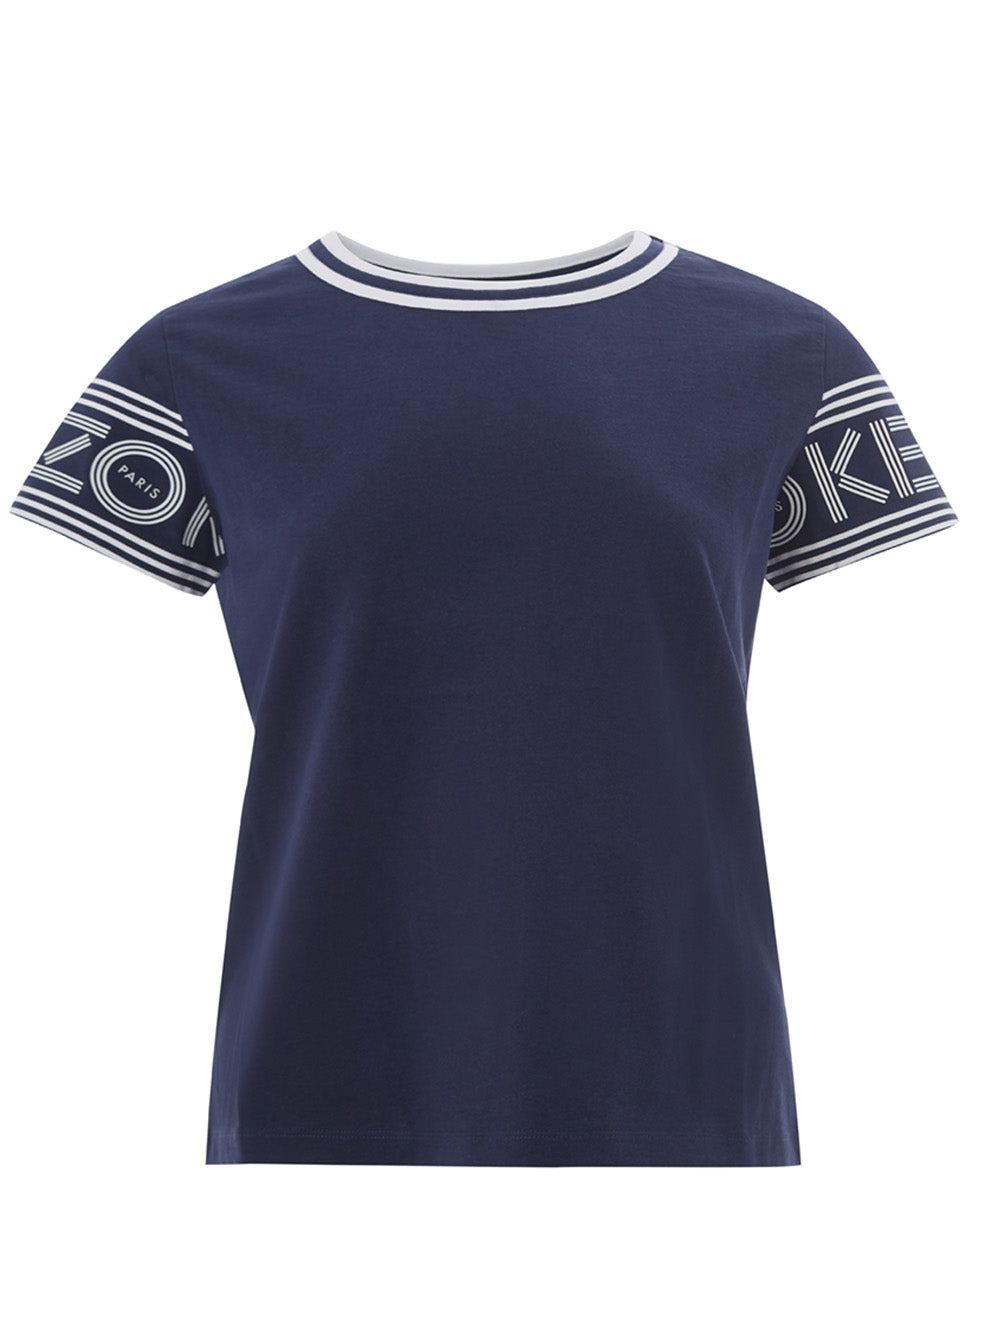 Fashionsarah.com Fashionsarah.com Kenzo Blue Cotton T-Shirt With contrasting Logo on Sleeves